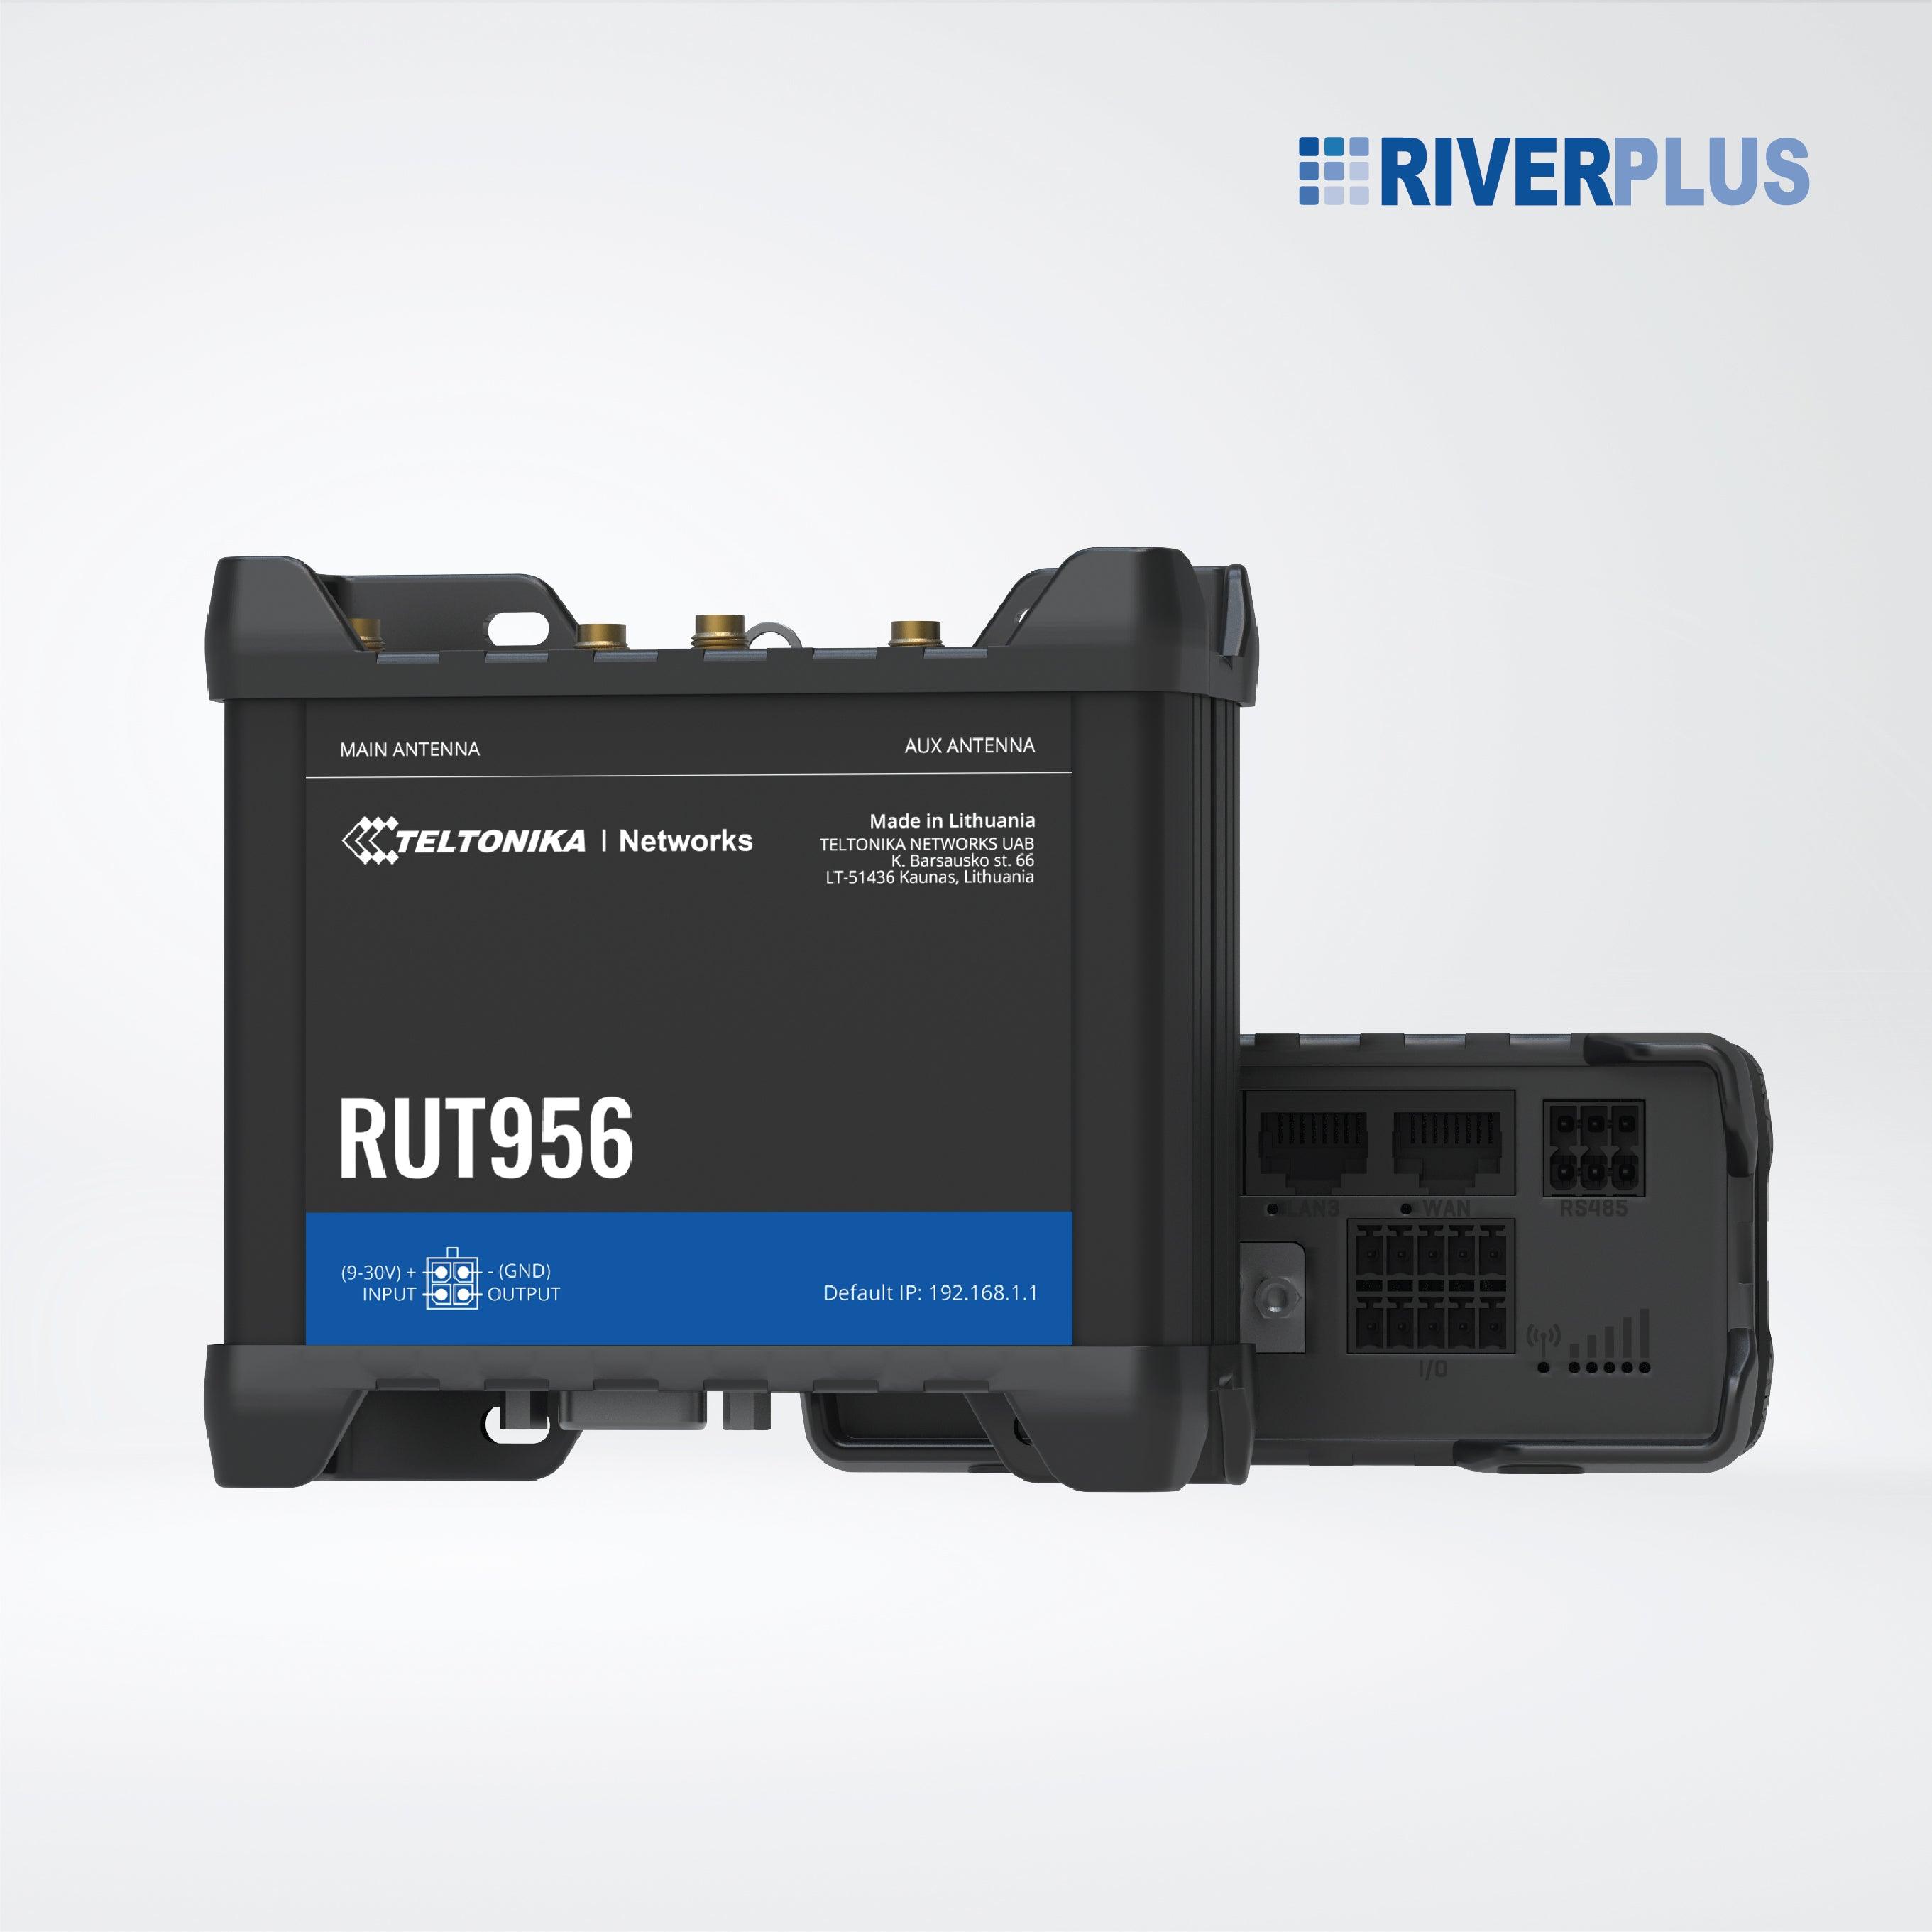 RUT956 Industrial 4G LTE/Wi-Fi/Dual-SIM/RS232/RS485 - Riverplus